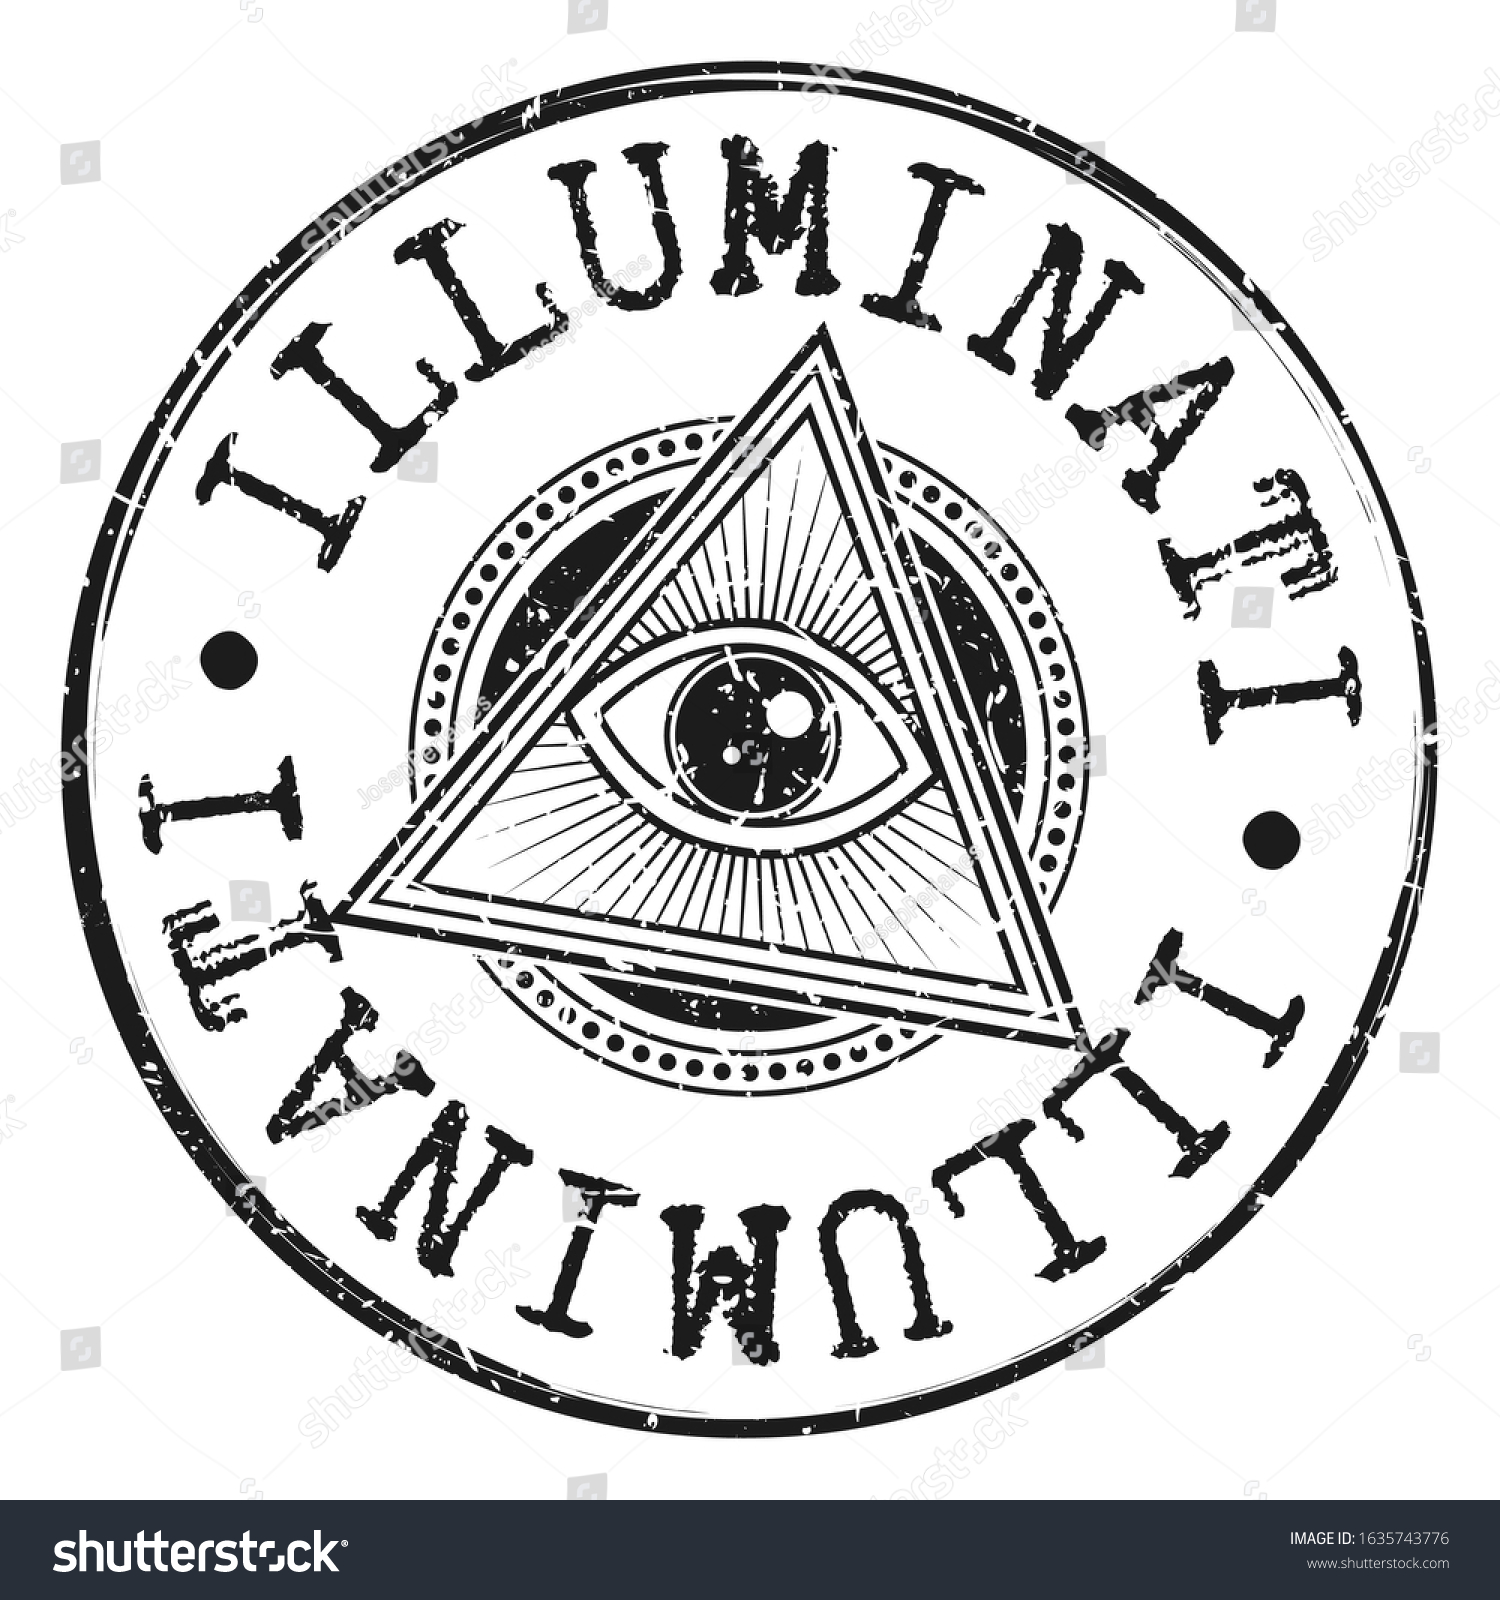 stock-vector-illuminati-symbol-stamp-old-vintage-style-conspiracy-eye-postal-vector-1635743776.jpg